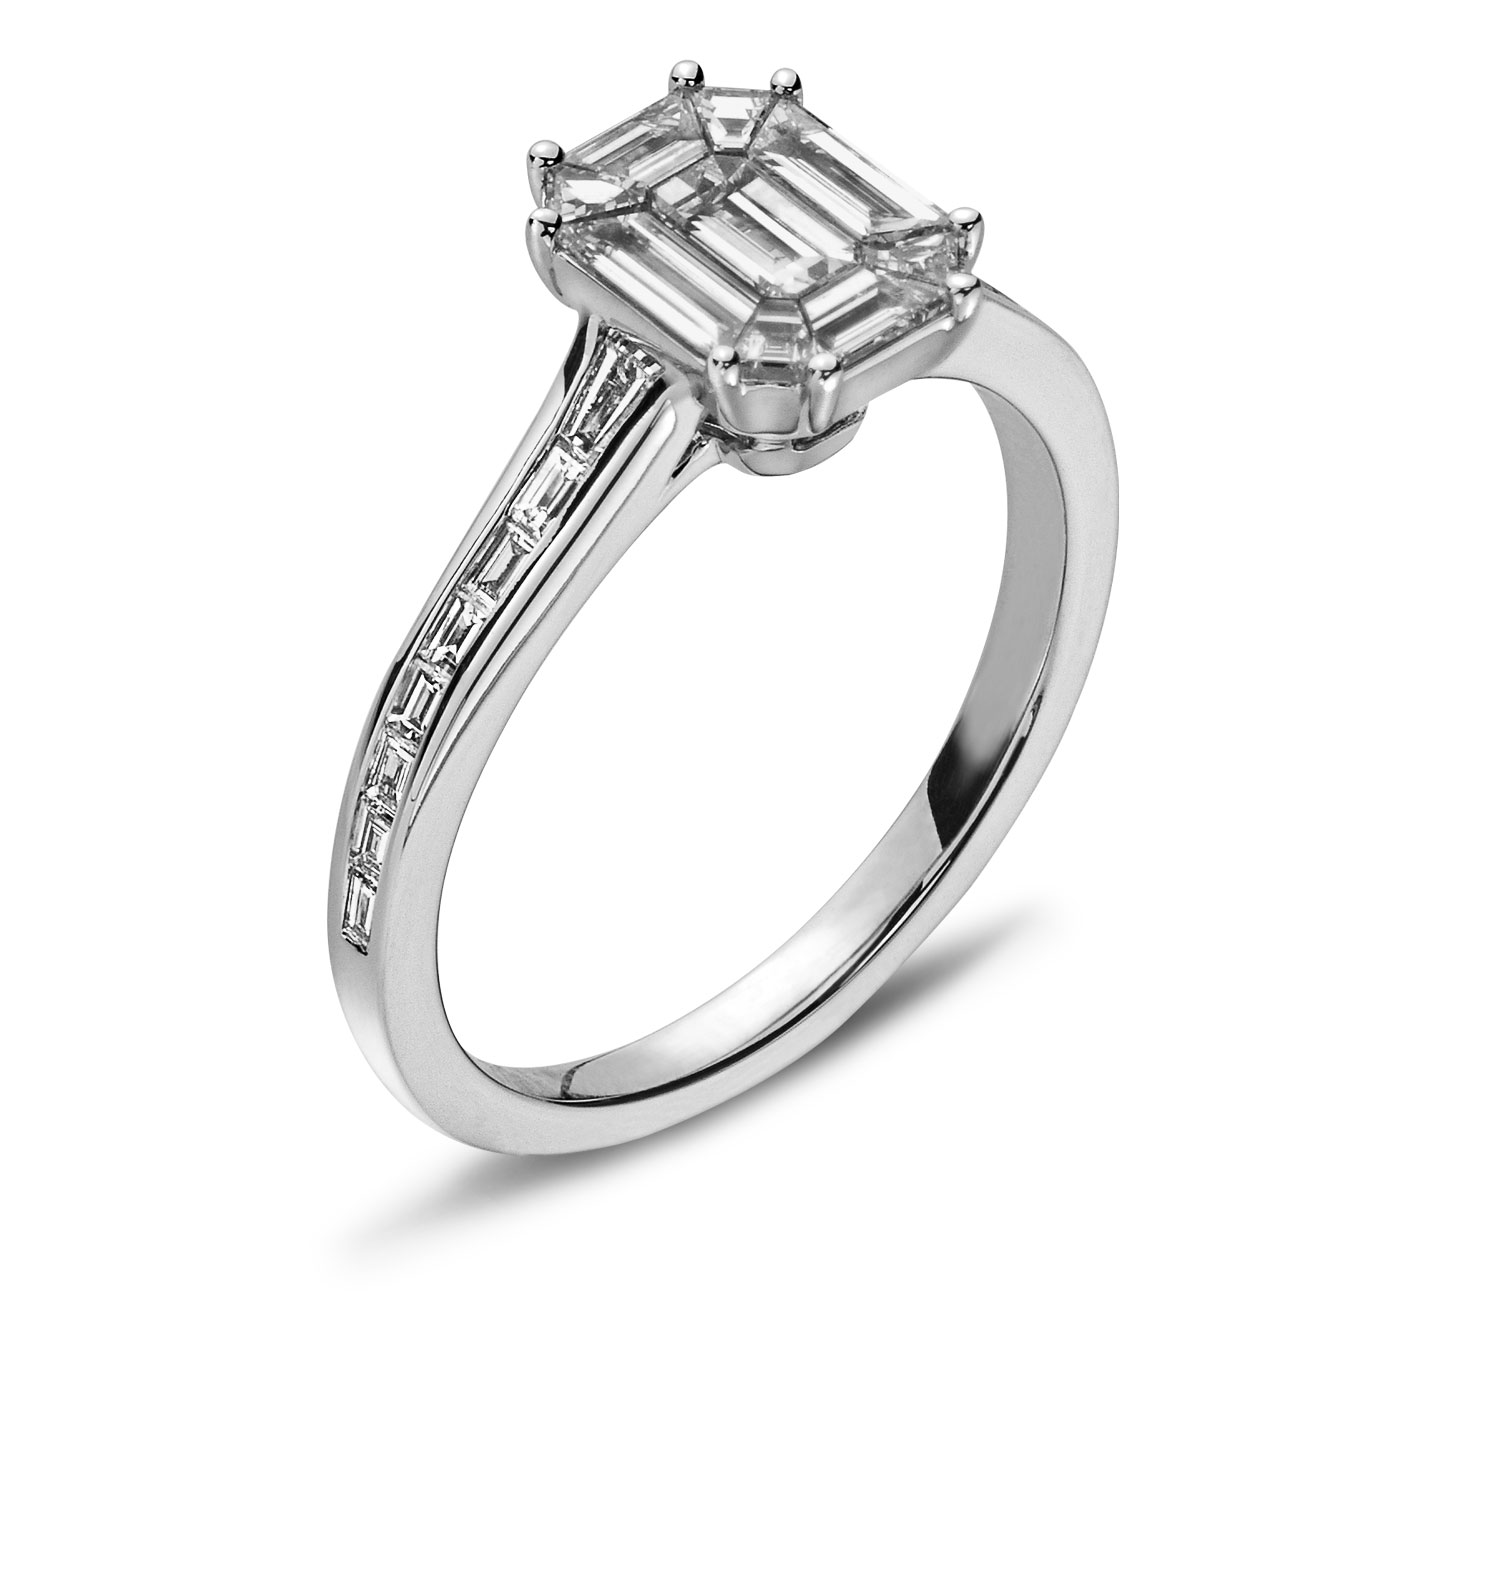 AURONOS Prestige Ring white gold 18K diamonds 0.69ct, baguette 0.21ct and trapeze diamonds 0.10ct